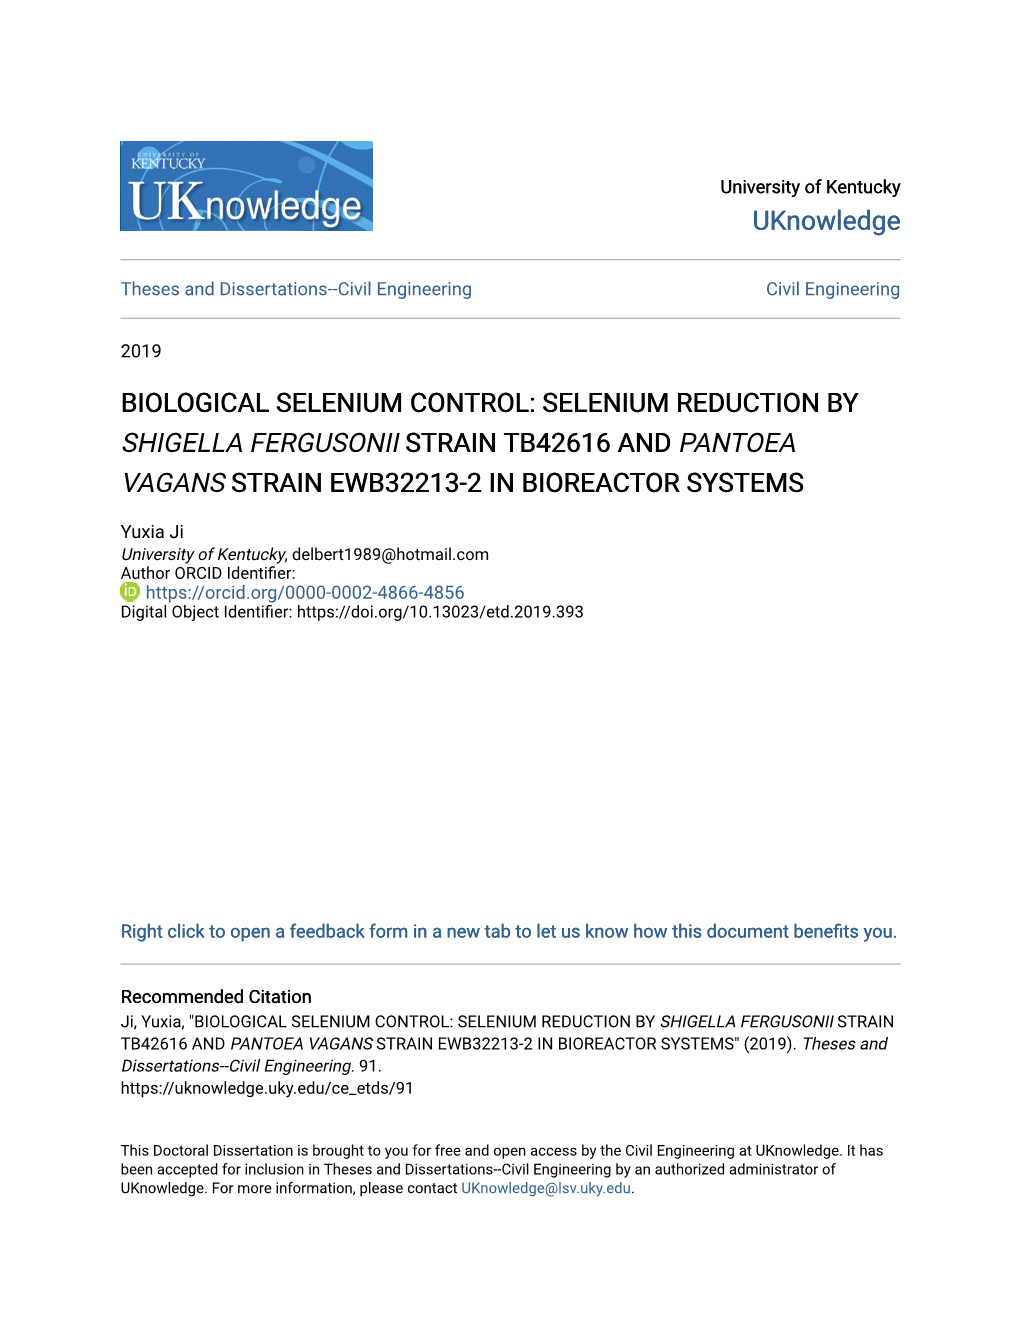 Selenium Reduction by Shigella Fergusonii Strain Tb42616 and Pantoea Vagans Strain Ewb32213-2 in Bioreactor Systems